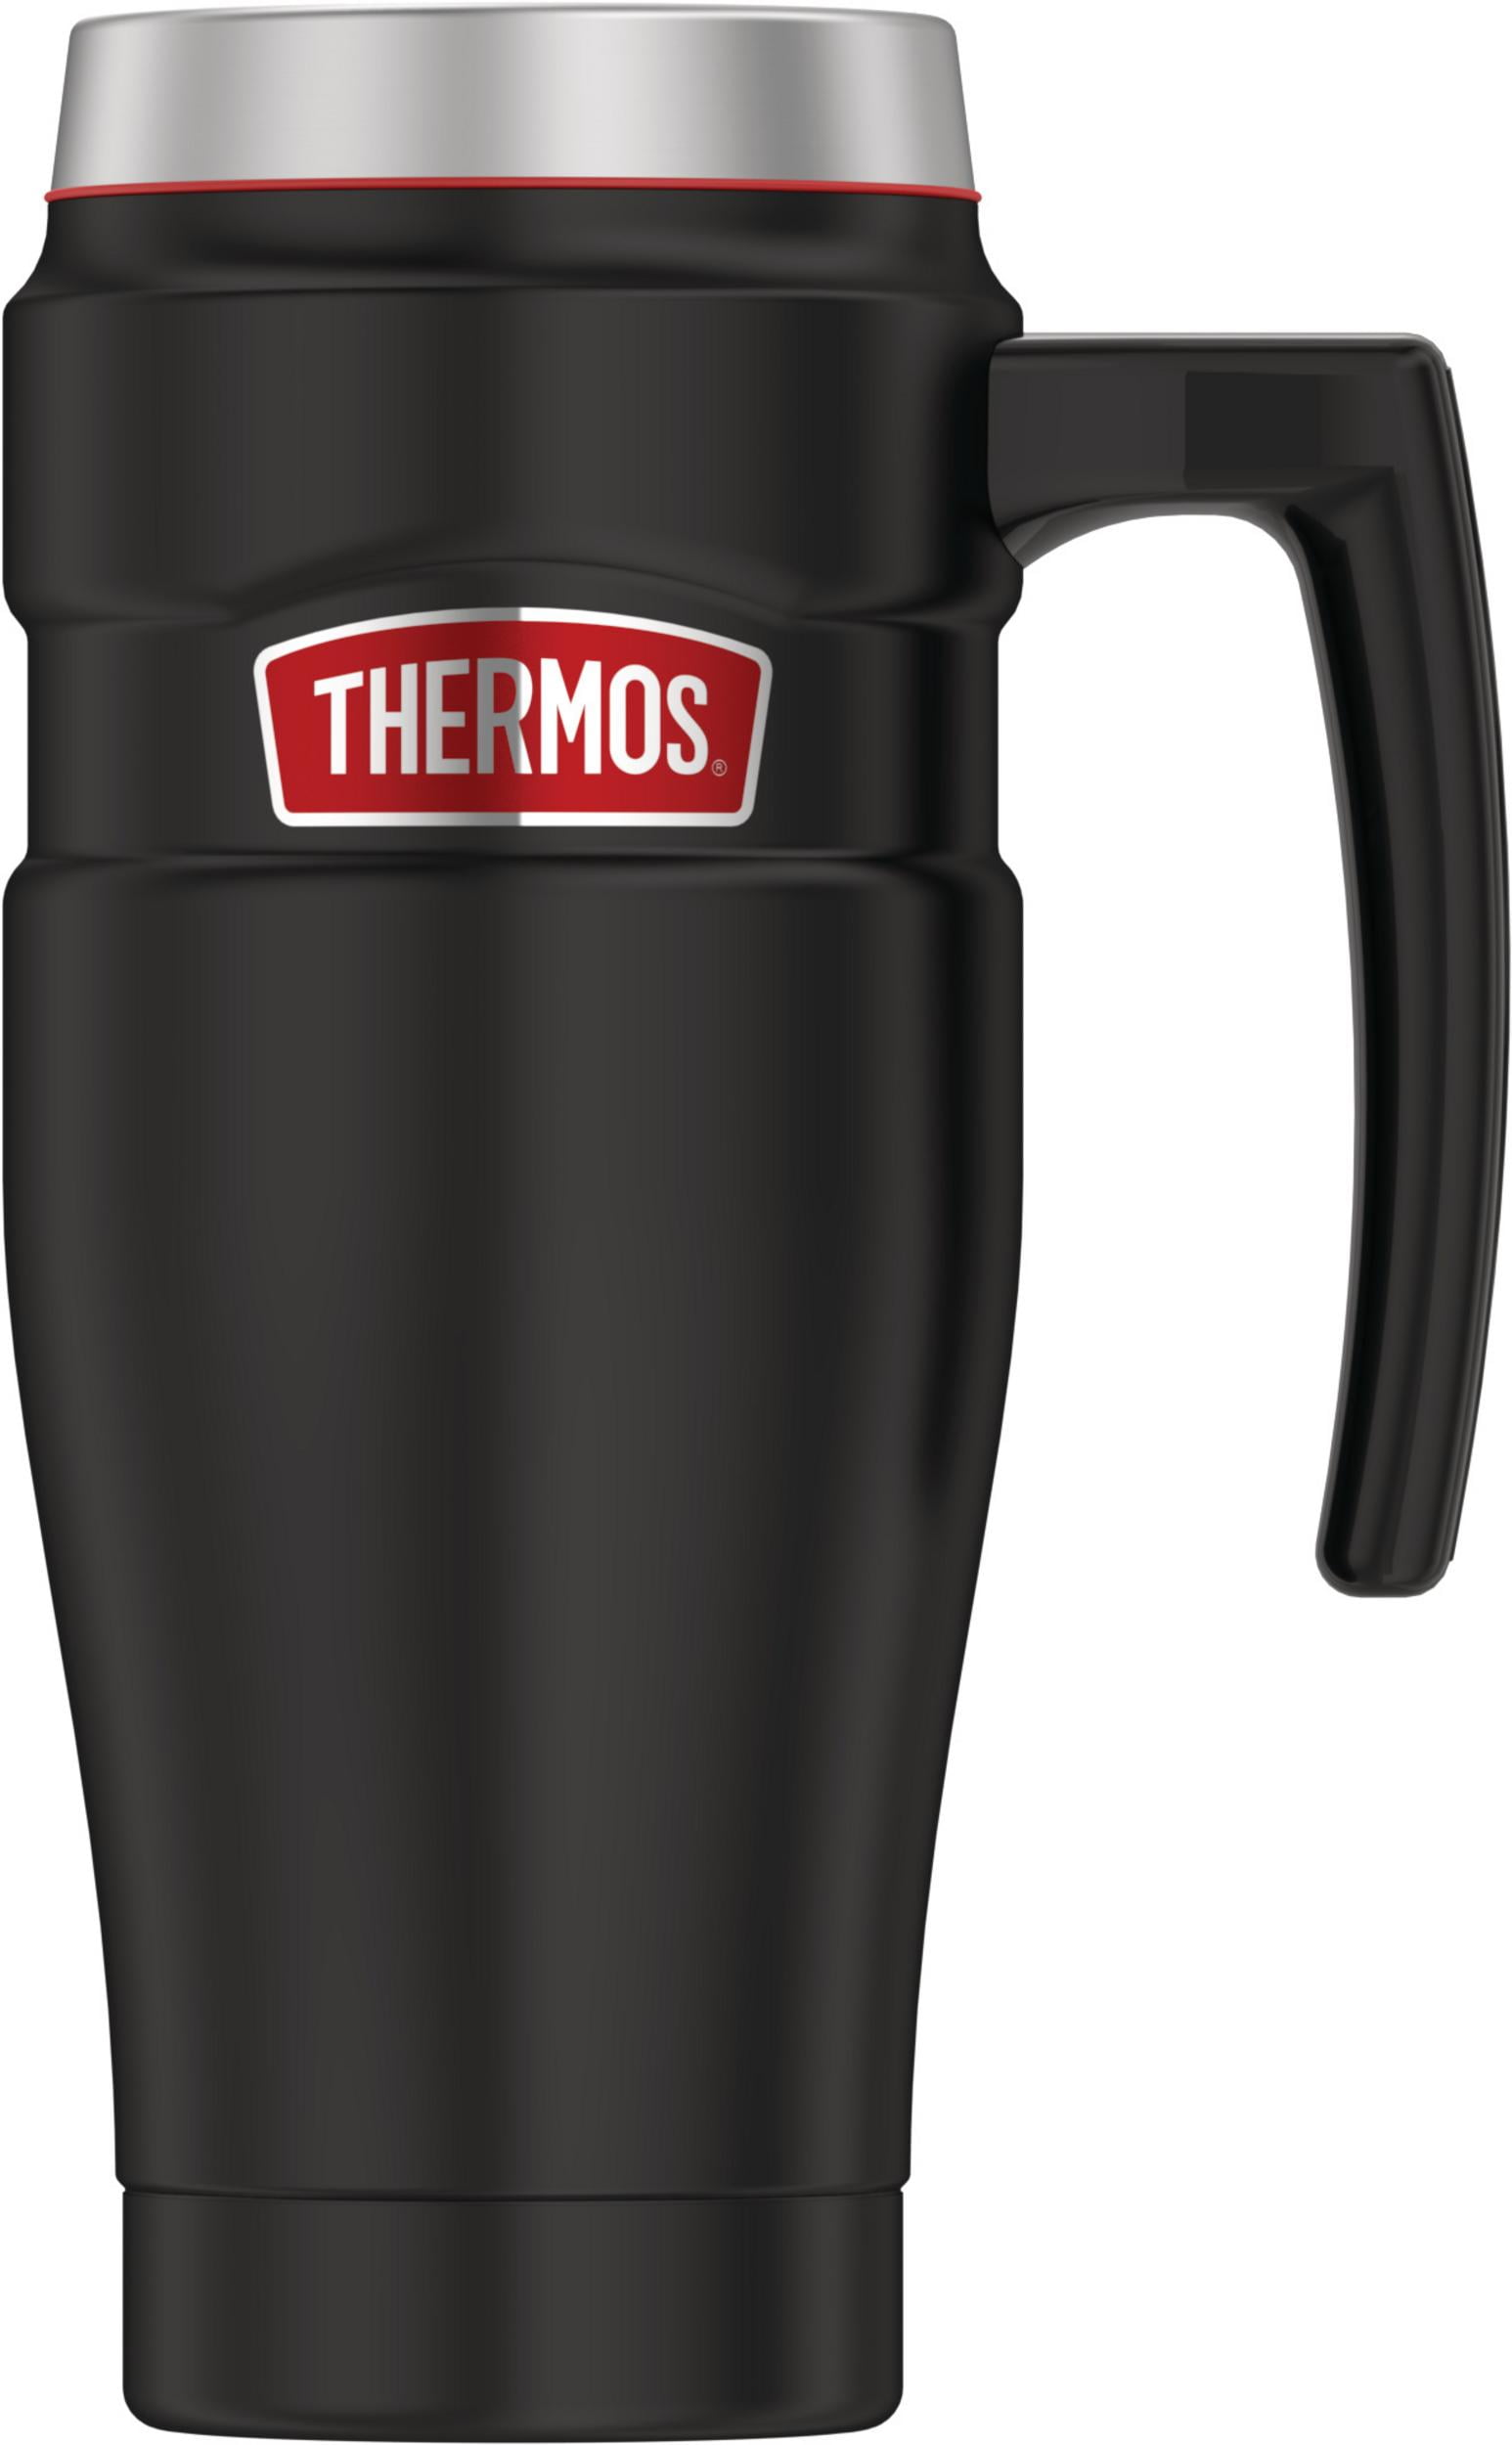 Thermos 16 oz Stainless Steel Coffee Mug - SK1600MDBW4